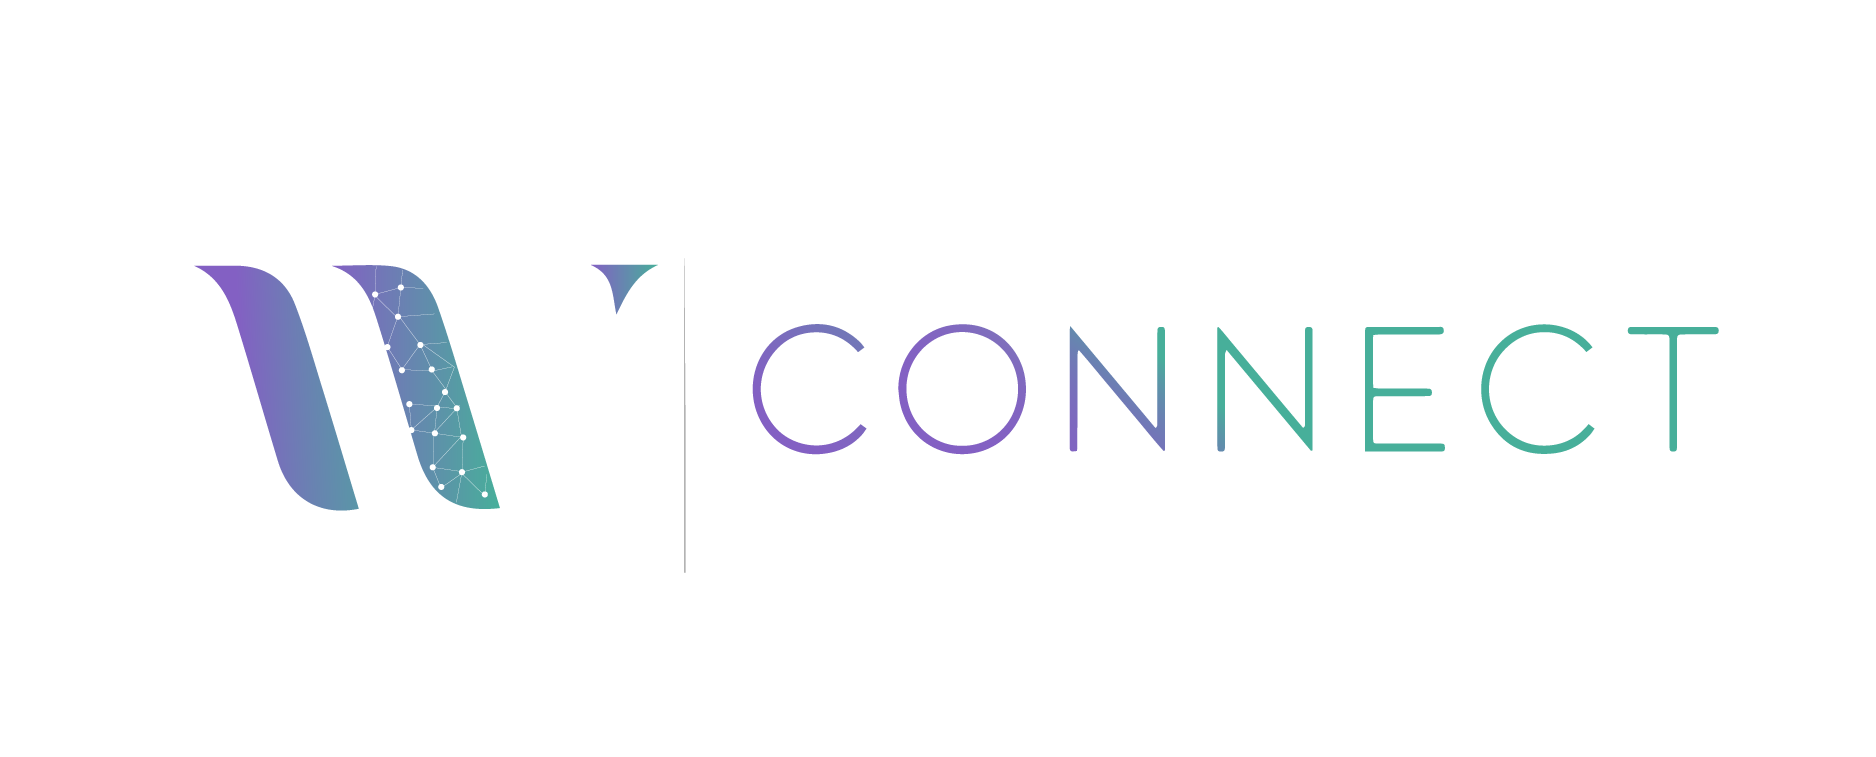 WE CONNECT - Branding